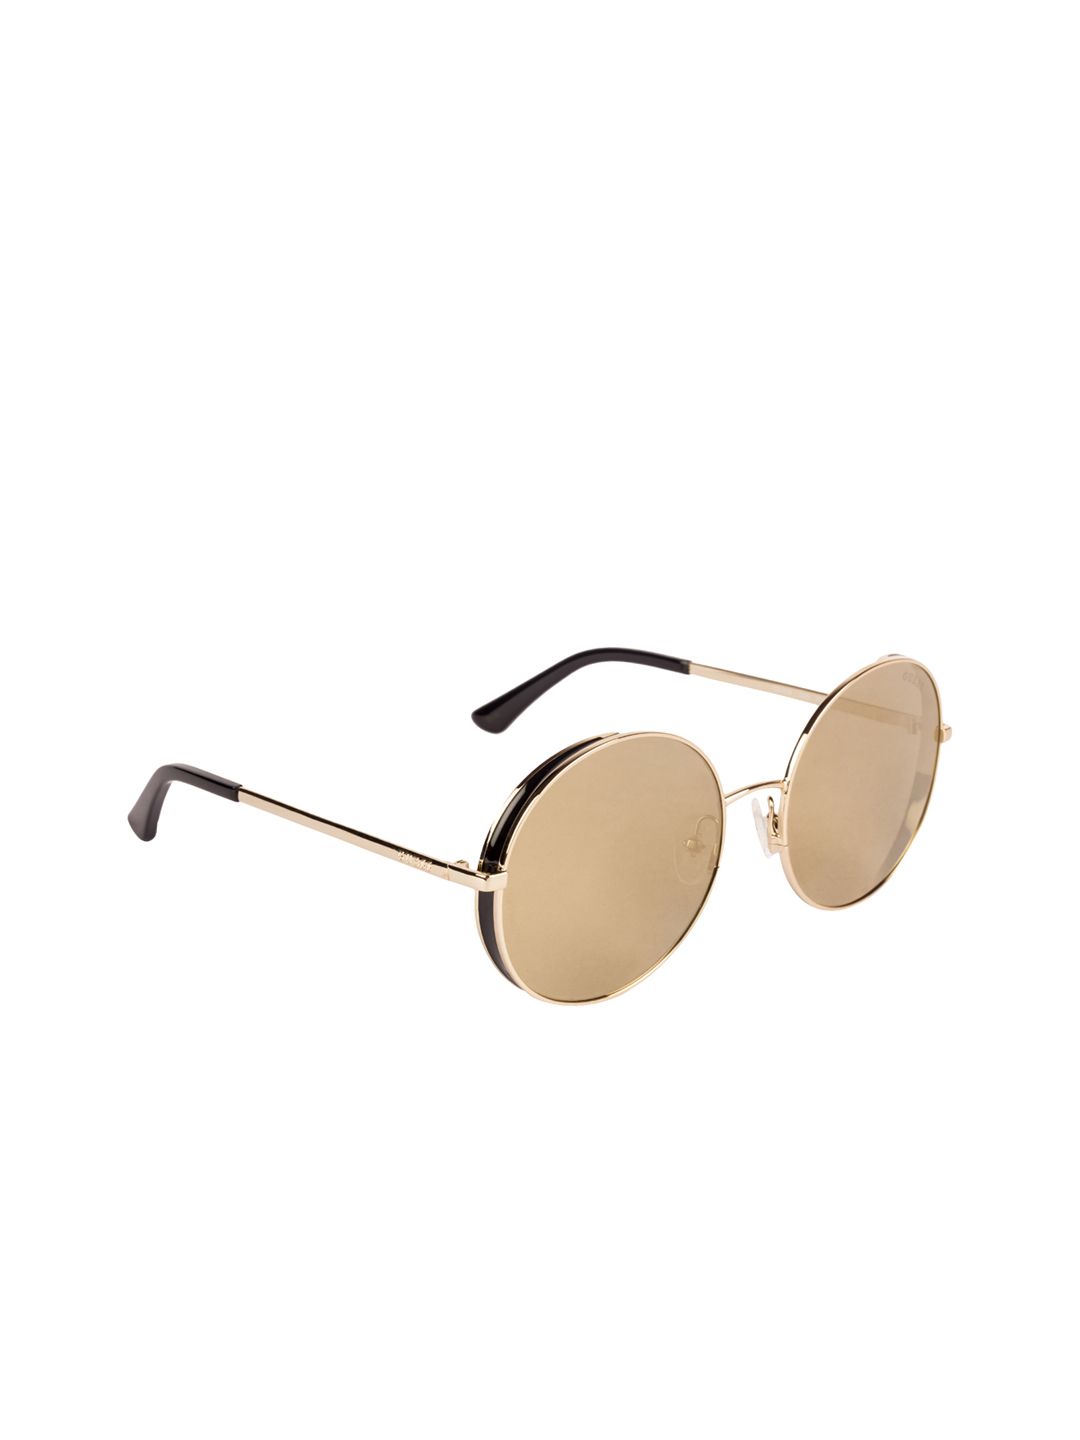 GUESS Women Round Sunglasses GU7606 57 32G Price in India